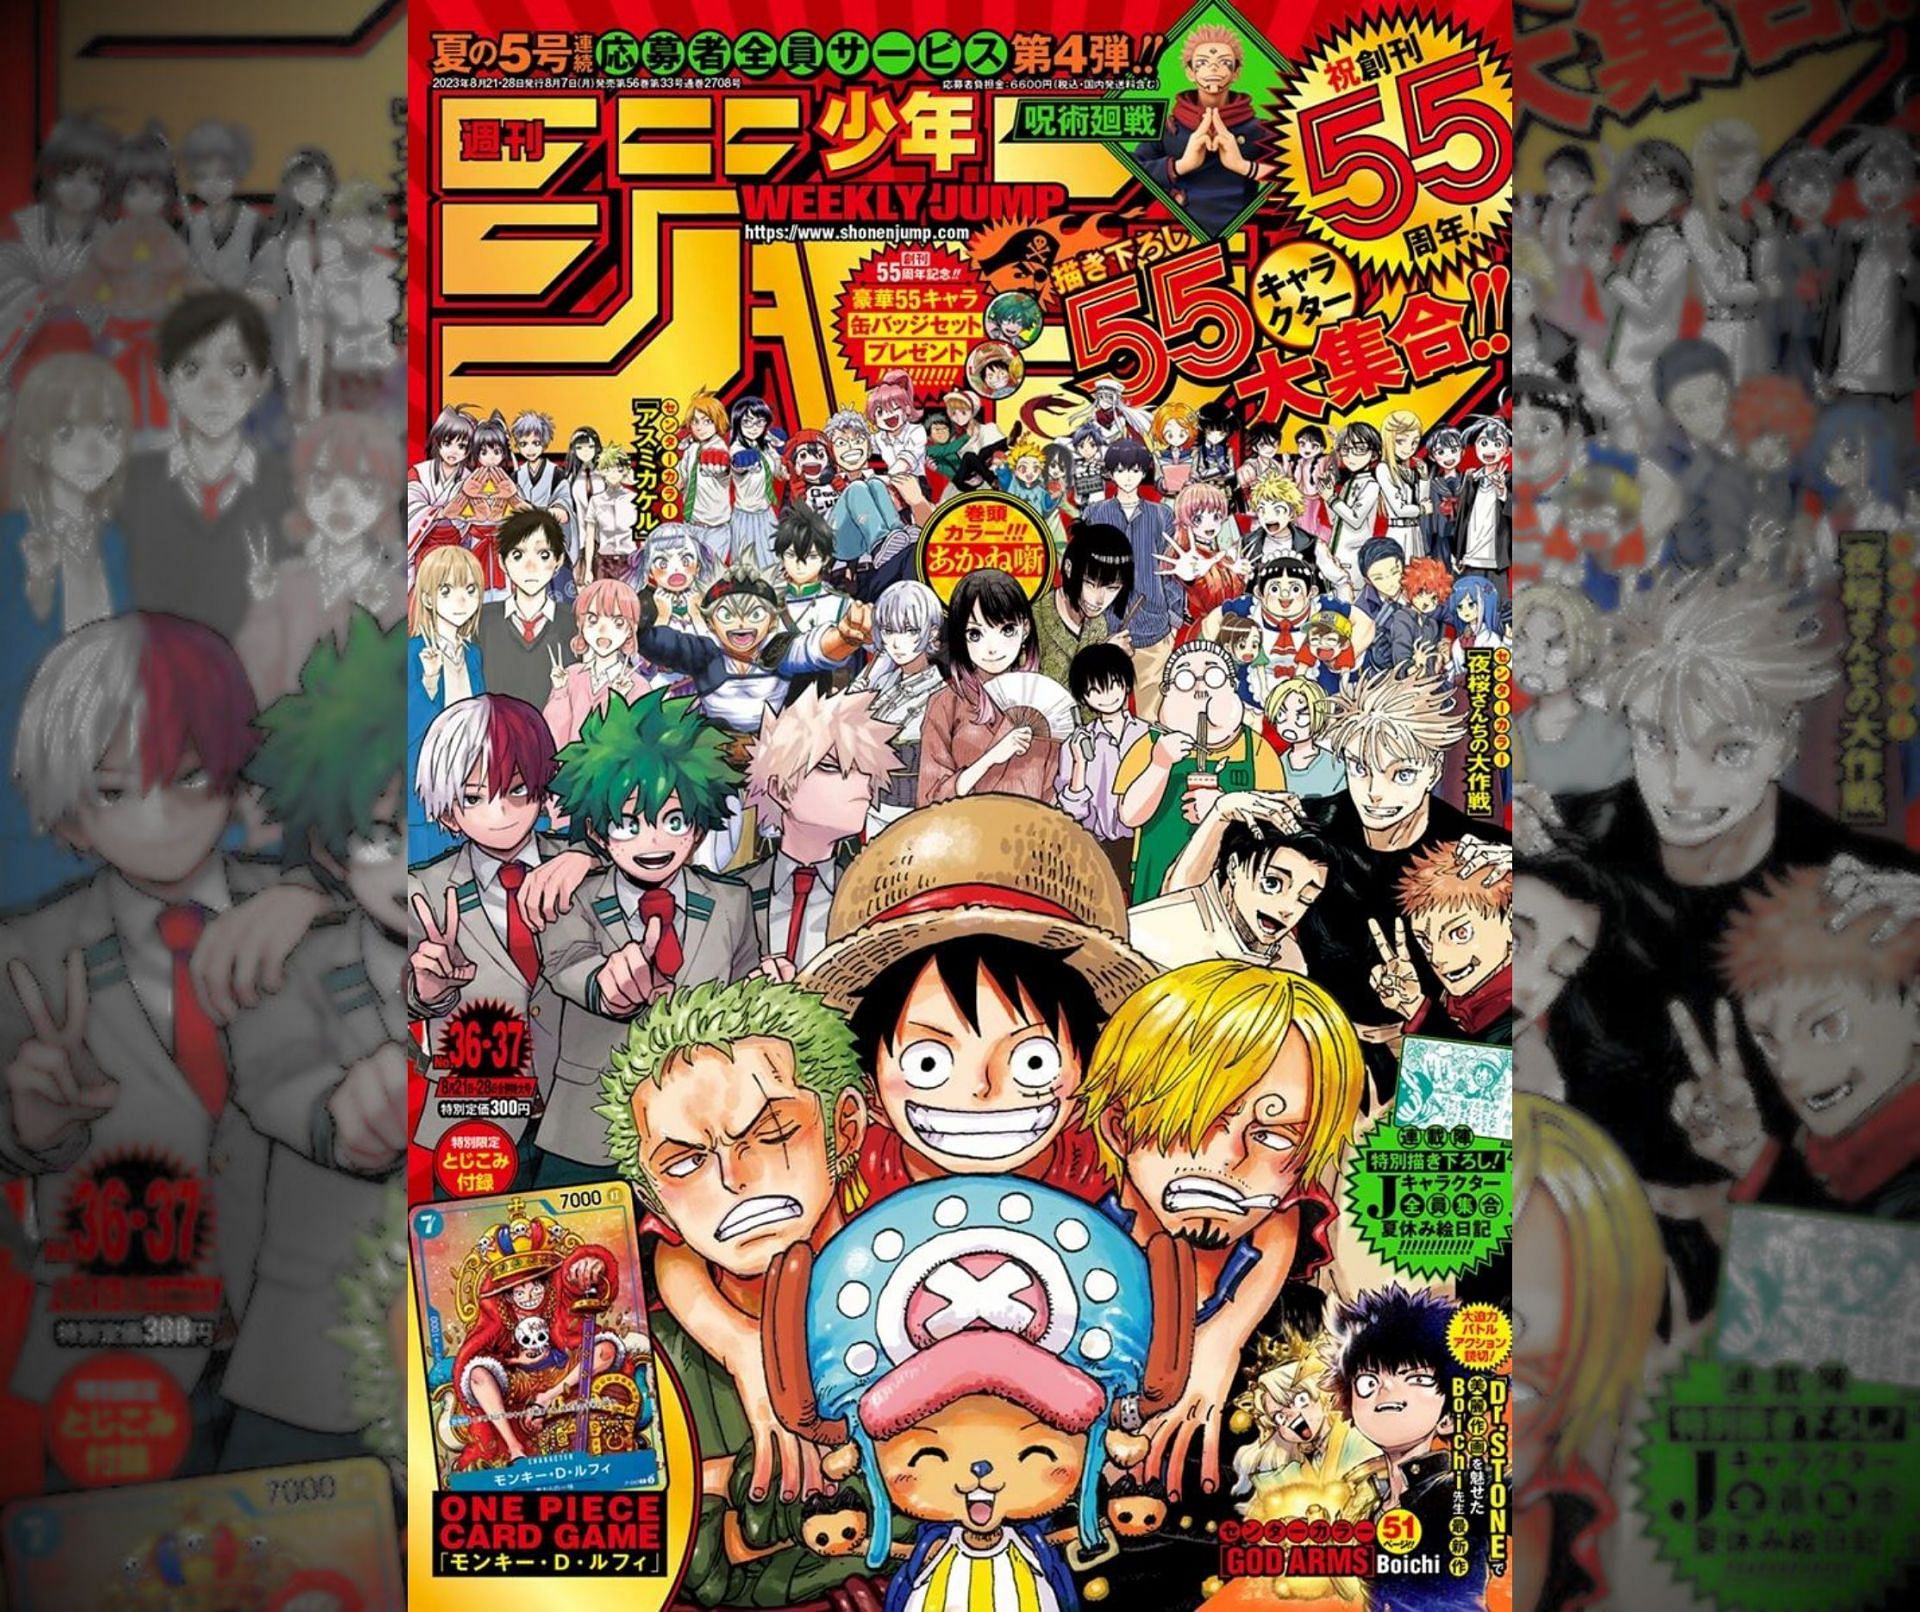 Weekly Shonen Jump Issue 36-37 cover (Image via Shueisha)